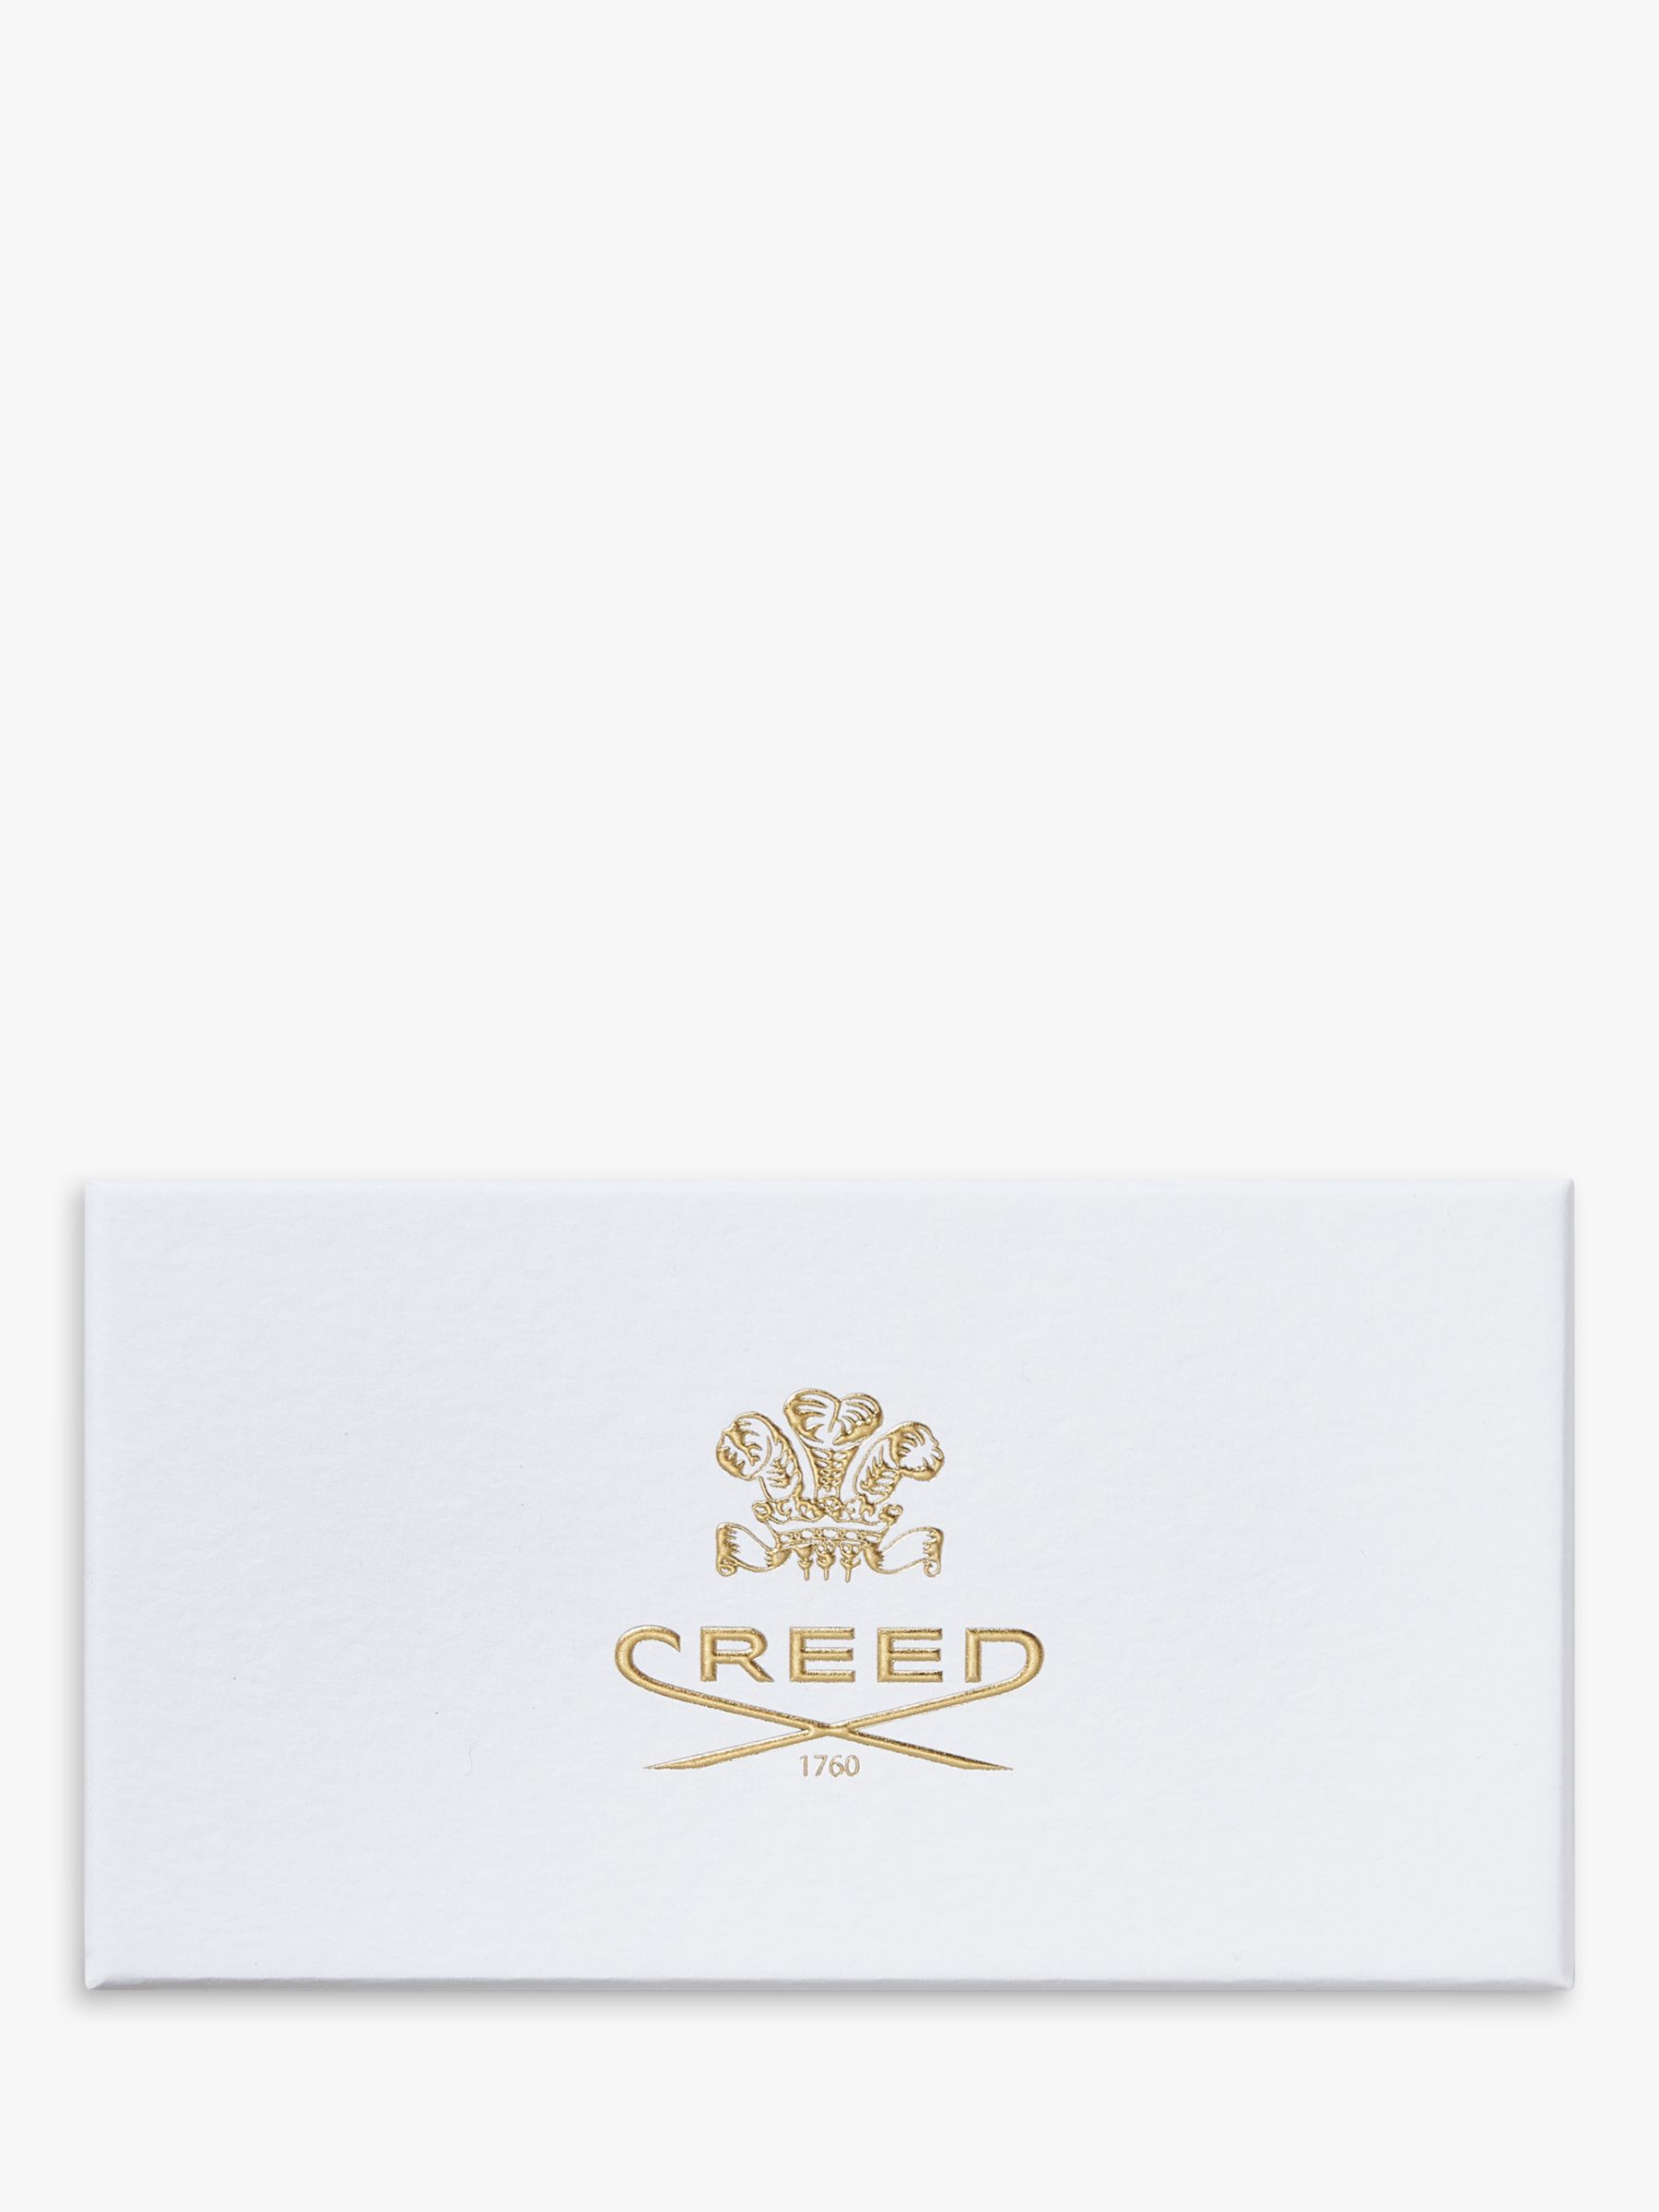 CREED Men's Sample Inspiration Fragrance Gift Set 2